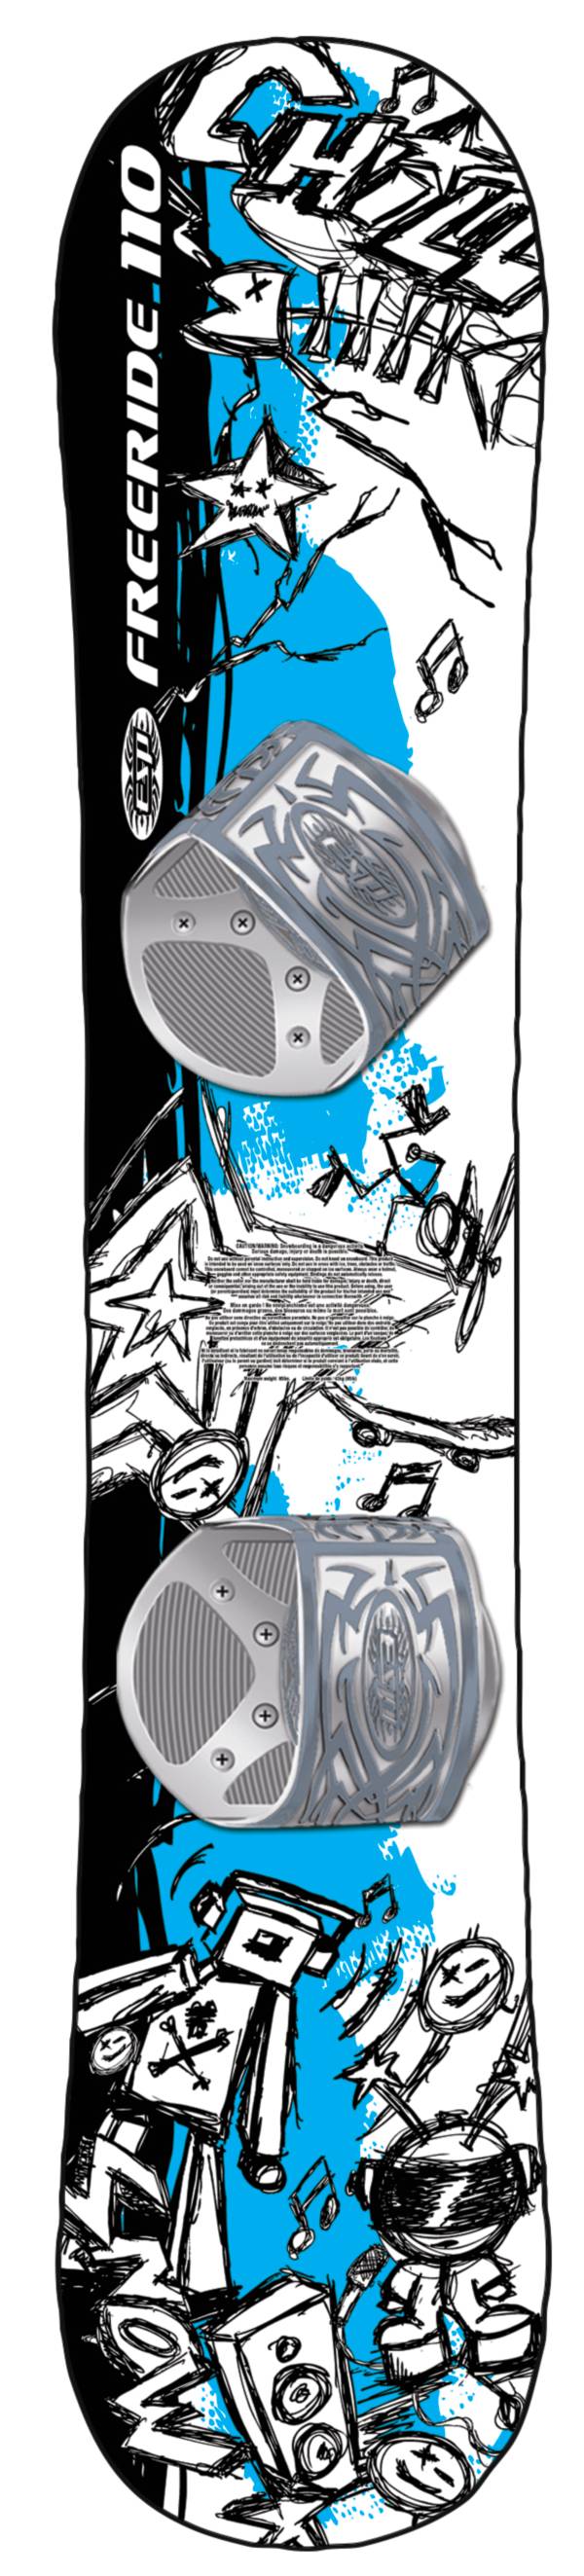 ESP Graffiti Toy Snowboard product image